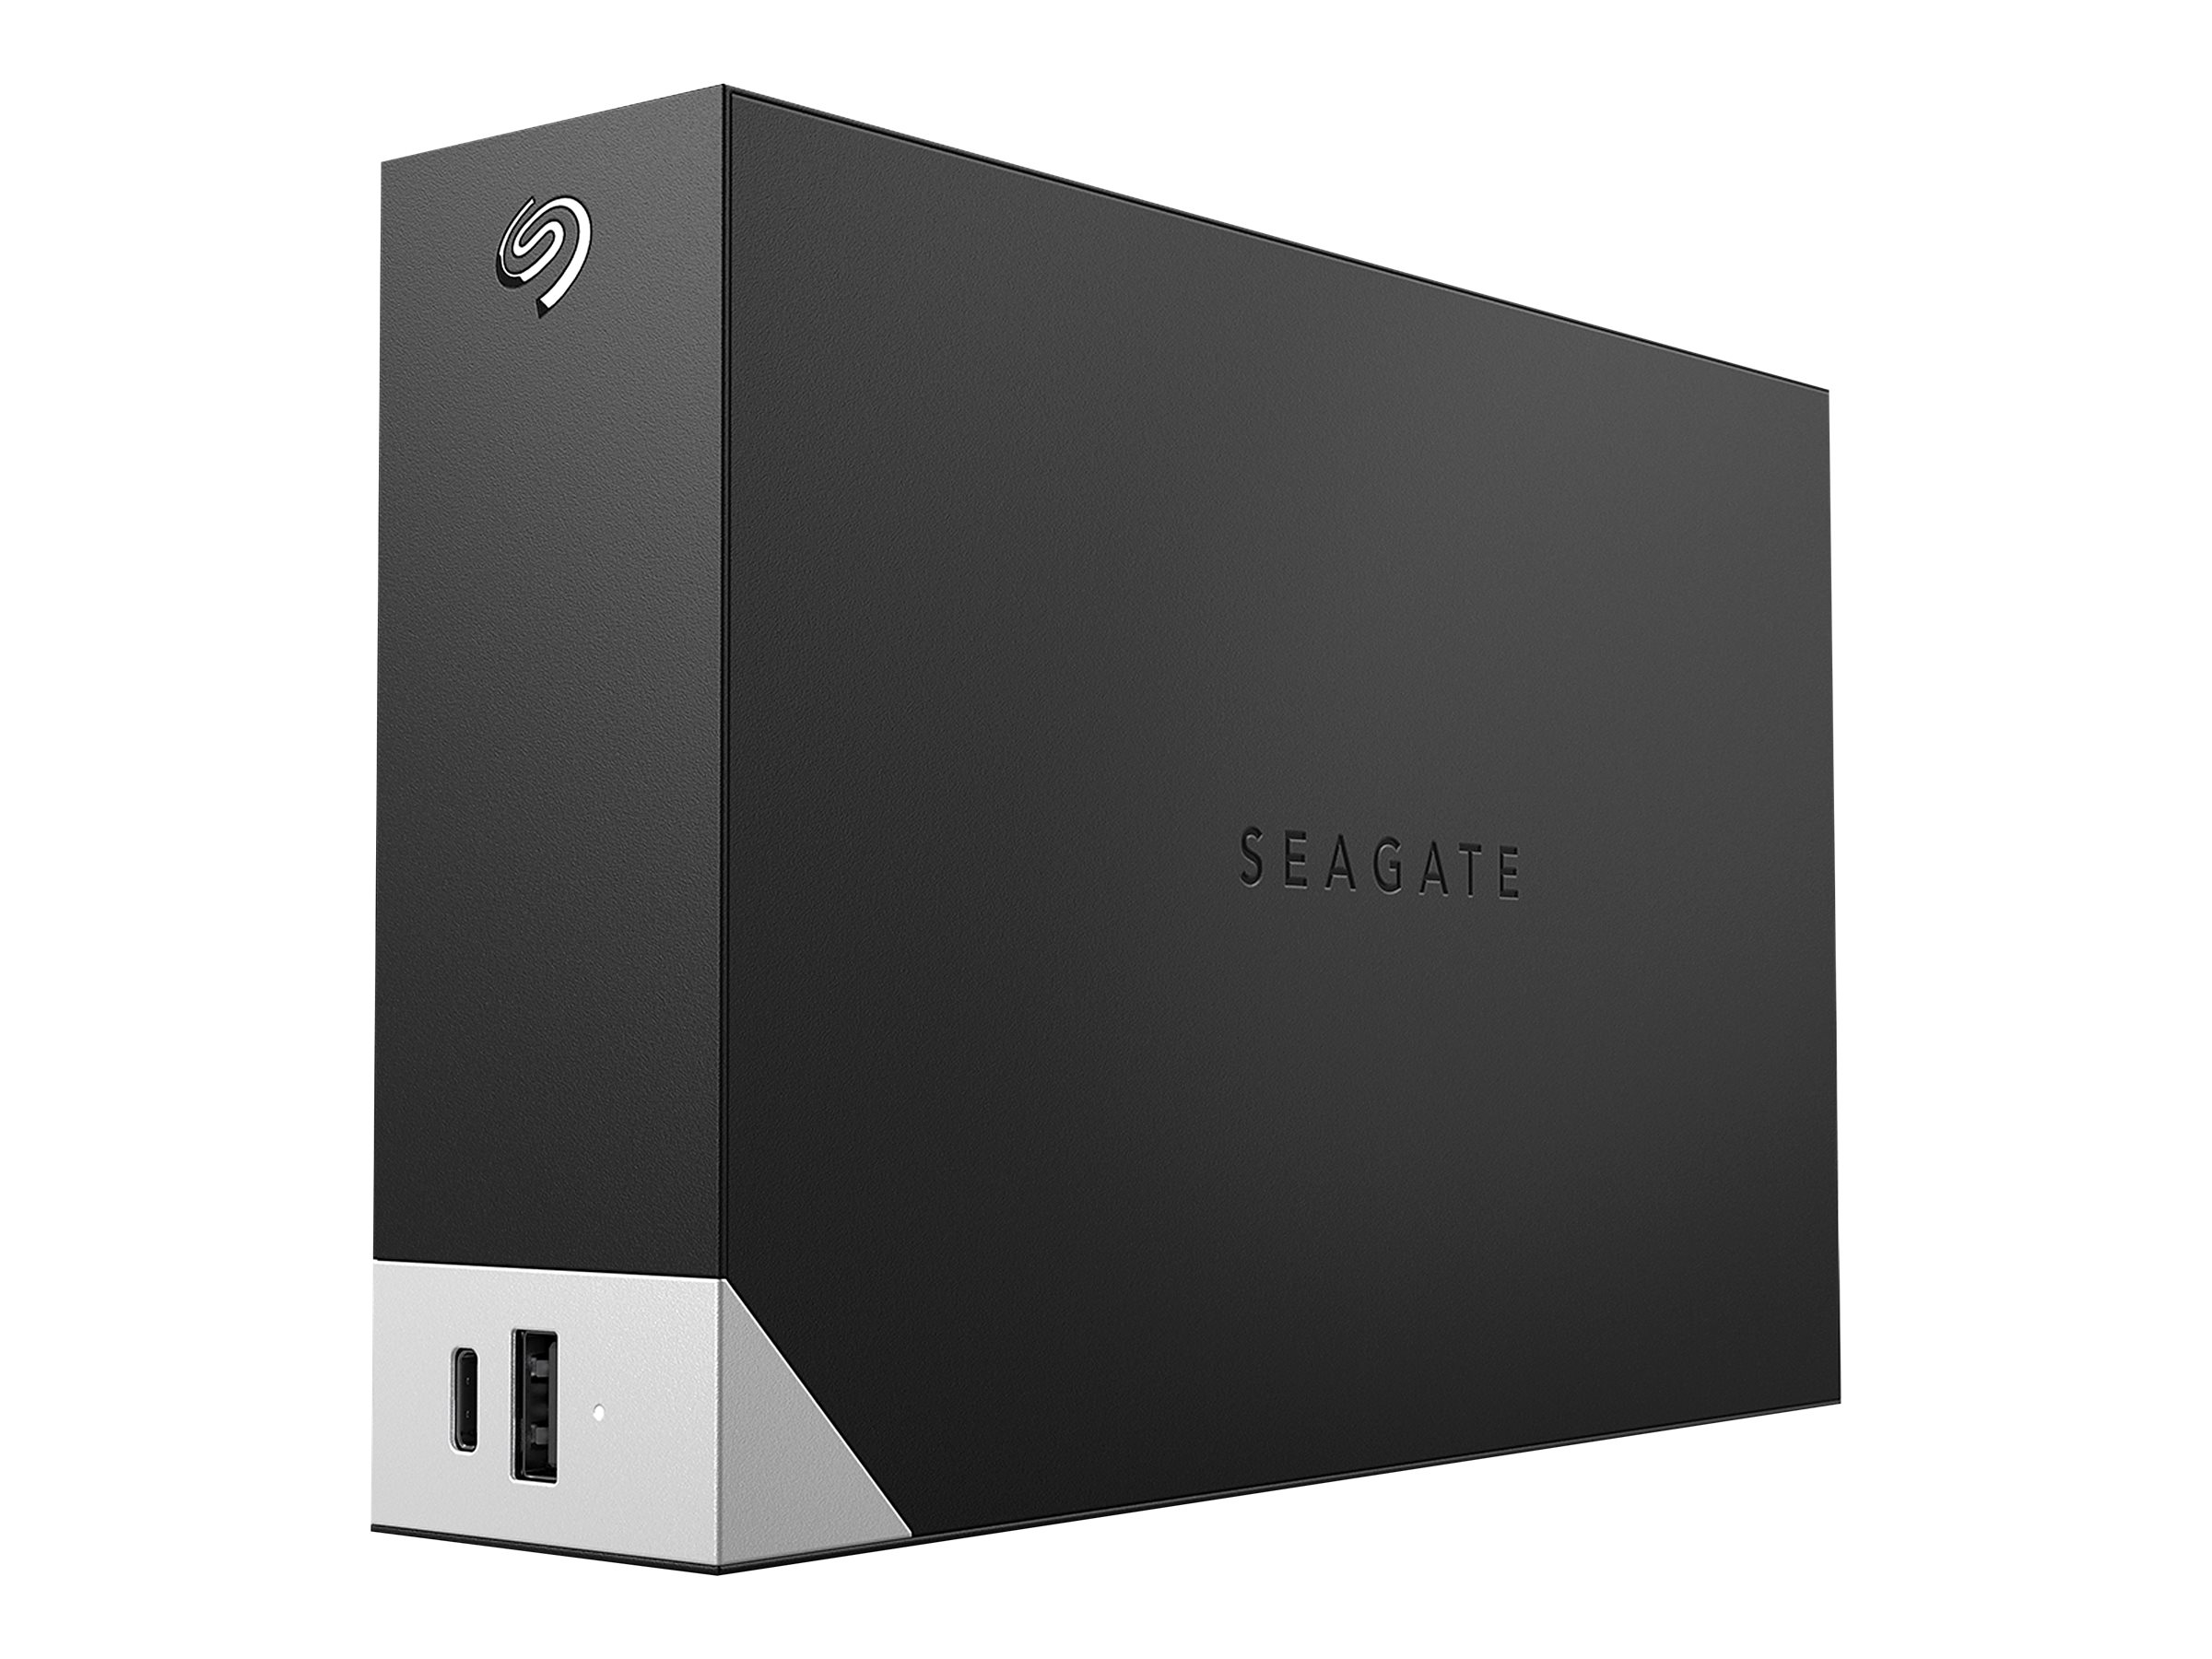 Seagate One Touch with hub STLC10000400 - Festplatte - 10 TB - extern (Stationär) - USB 3.0 - Schwarz